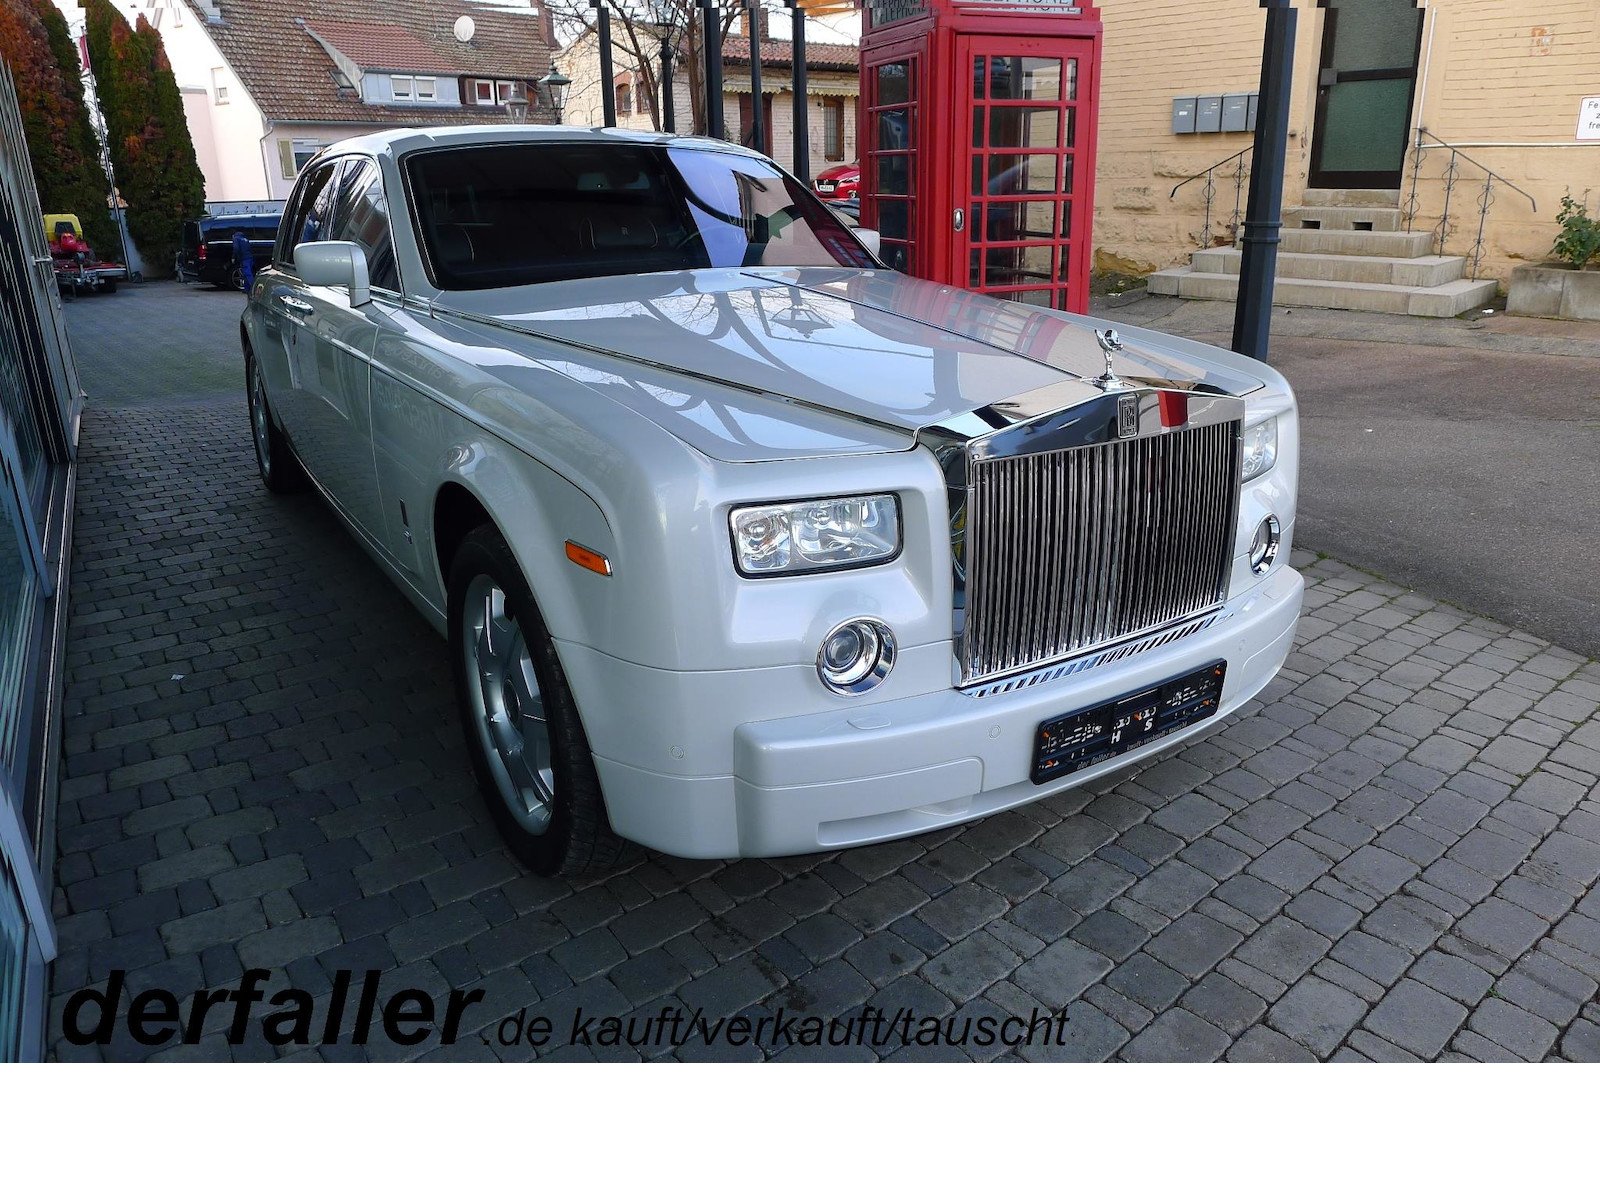 2007 Rolls-Royce Phantom VII - Limousine 10.000 km mit neuem